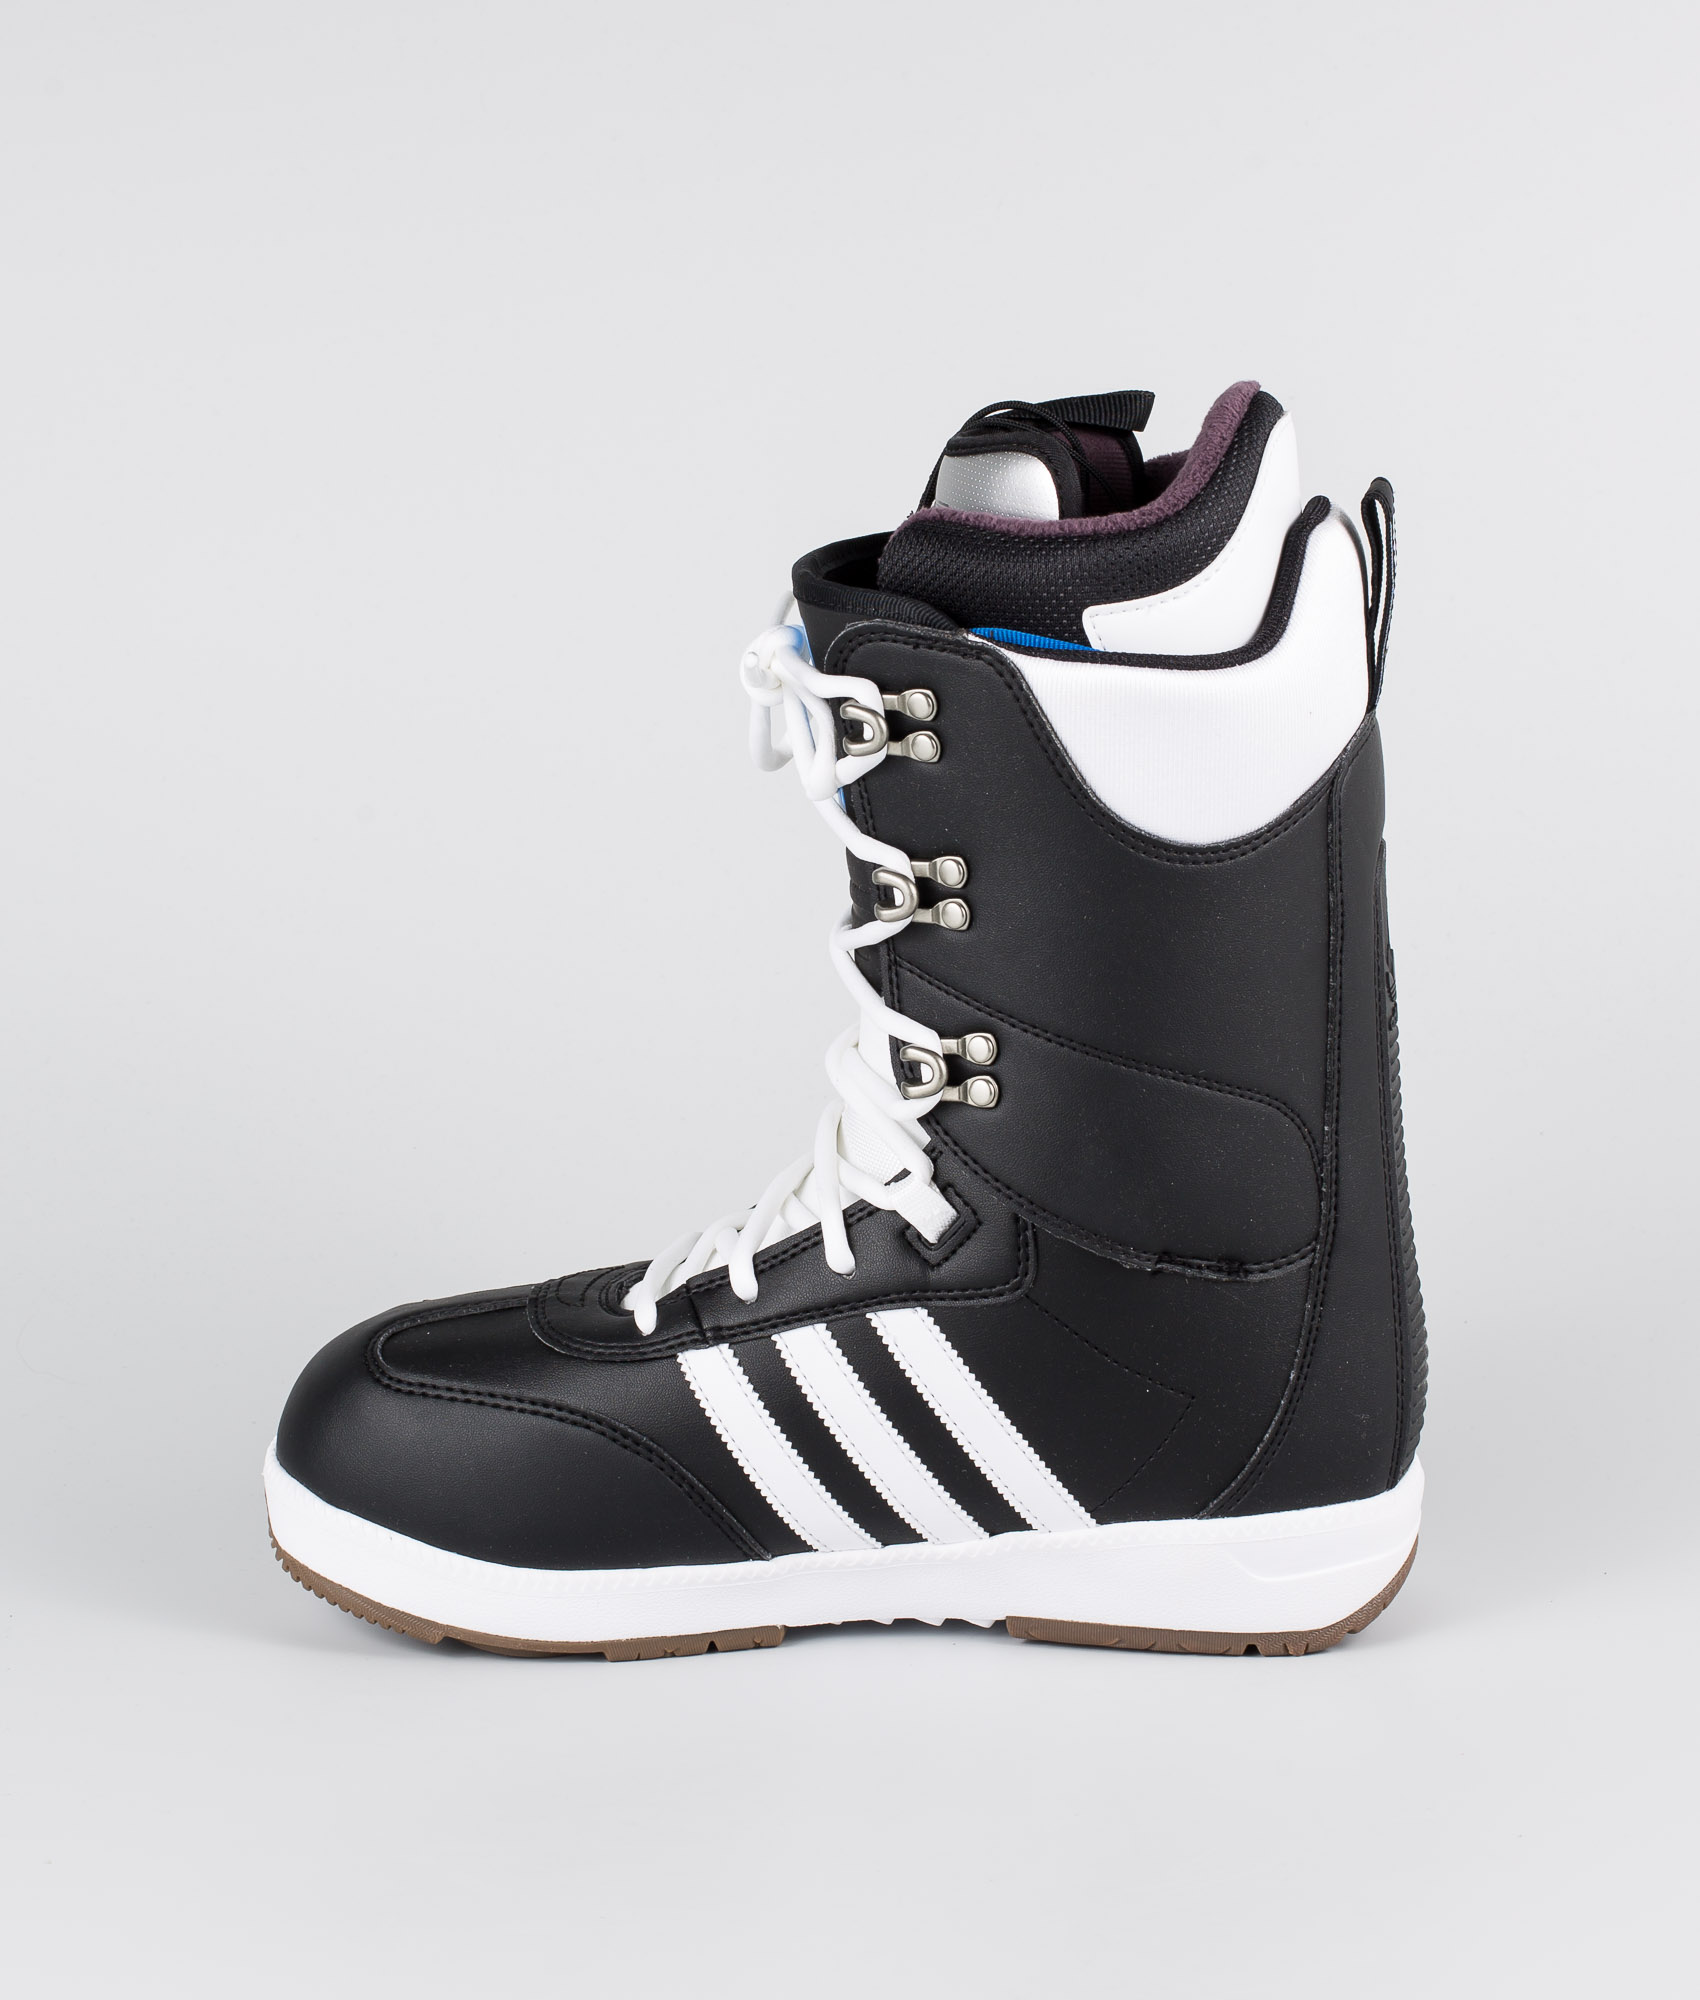 addidas samba snowboard boots 17 fit